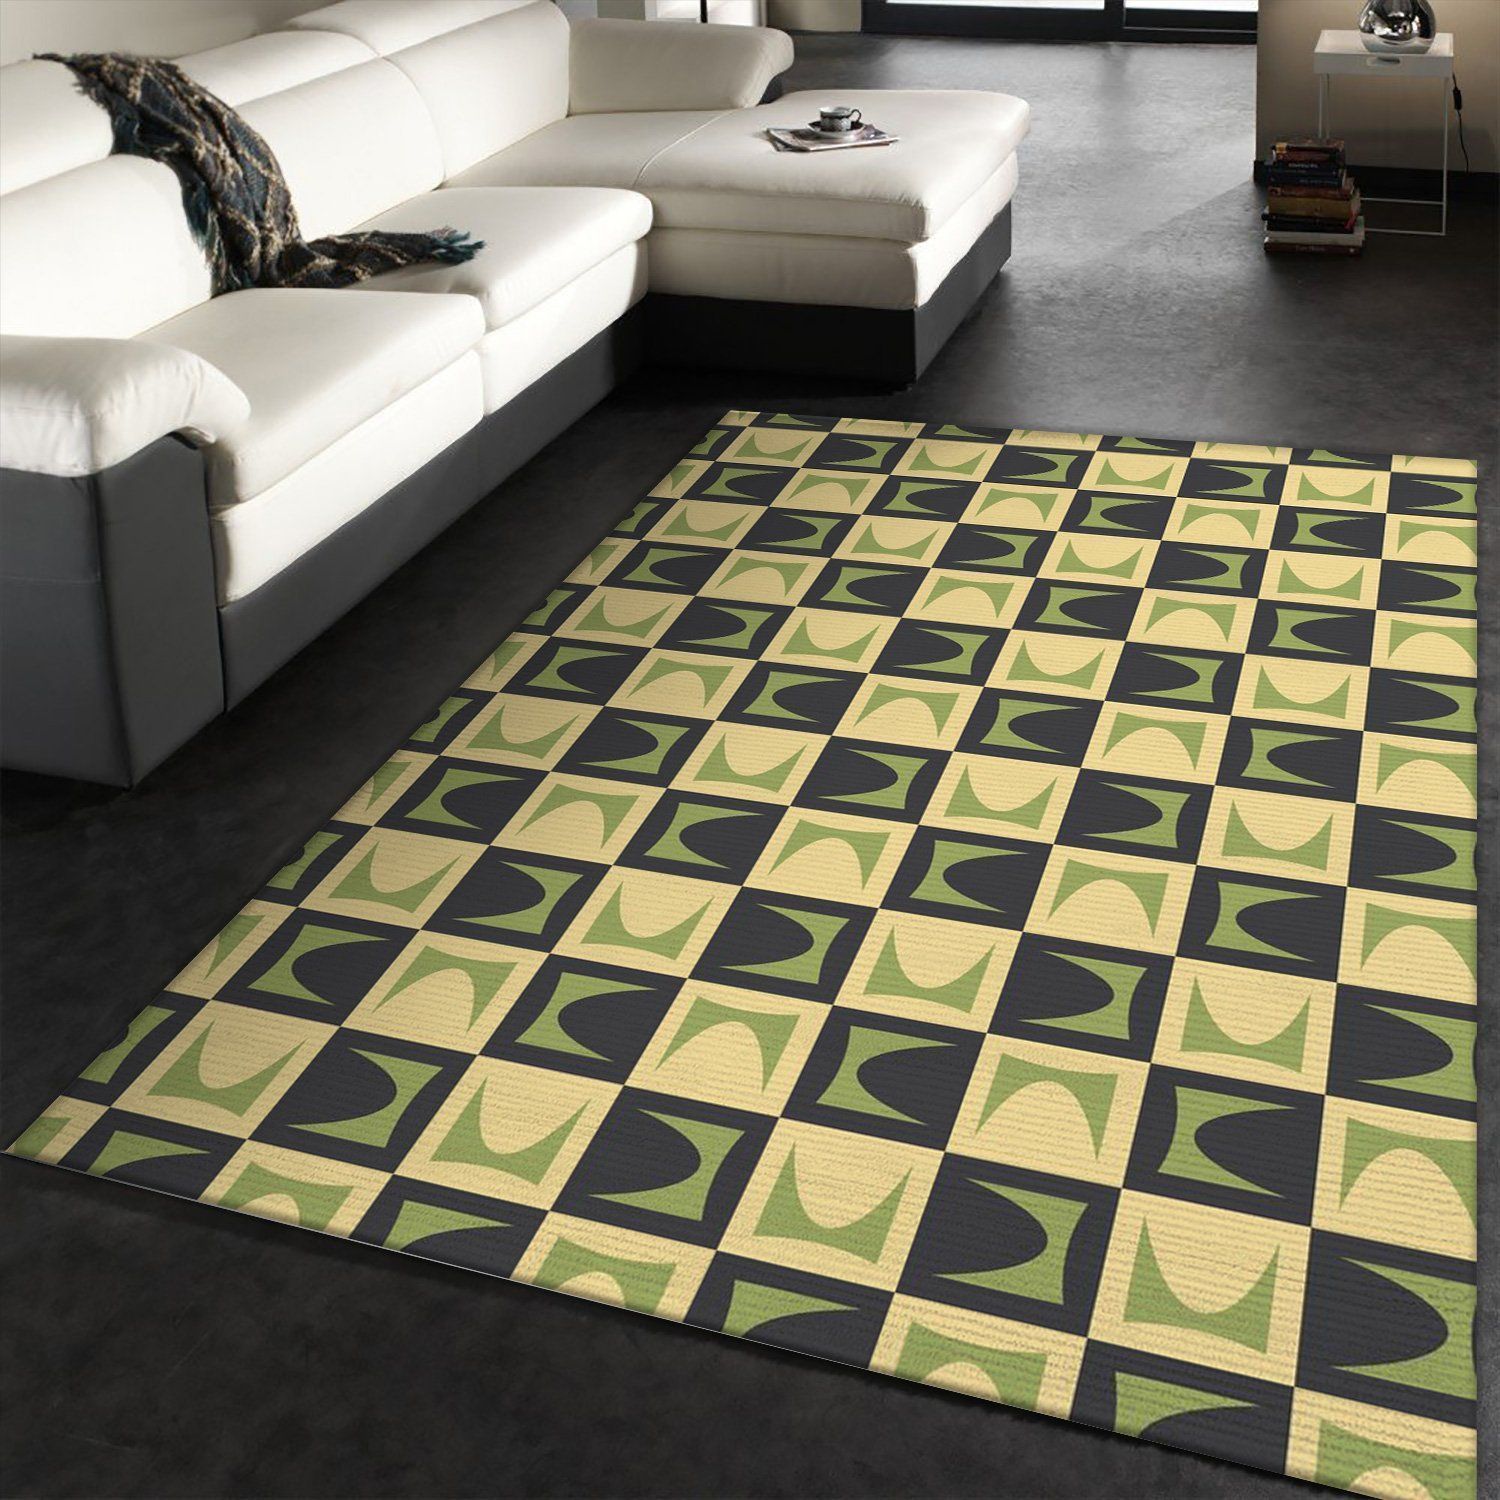 Midcentury Pattern 30 Area Rug Carpet, Living room and bedroom Rug, Home Decor Floor Decor - Indoor Outdoor Rugs